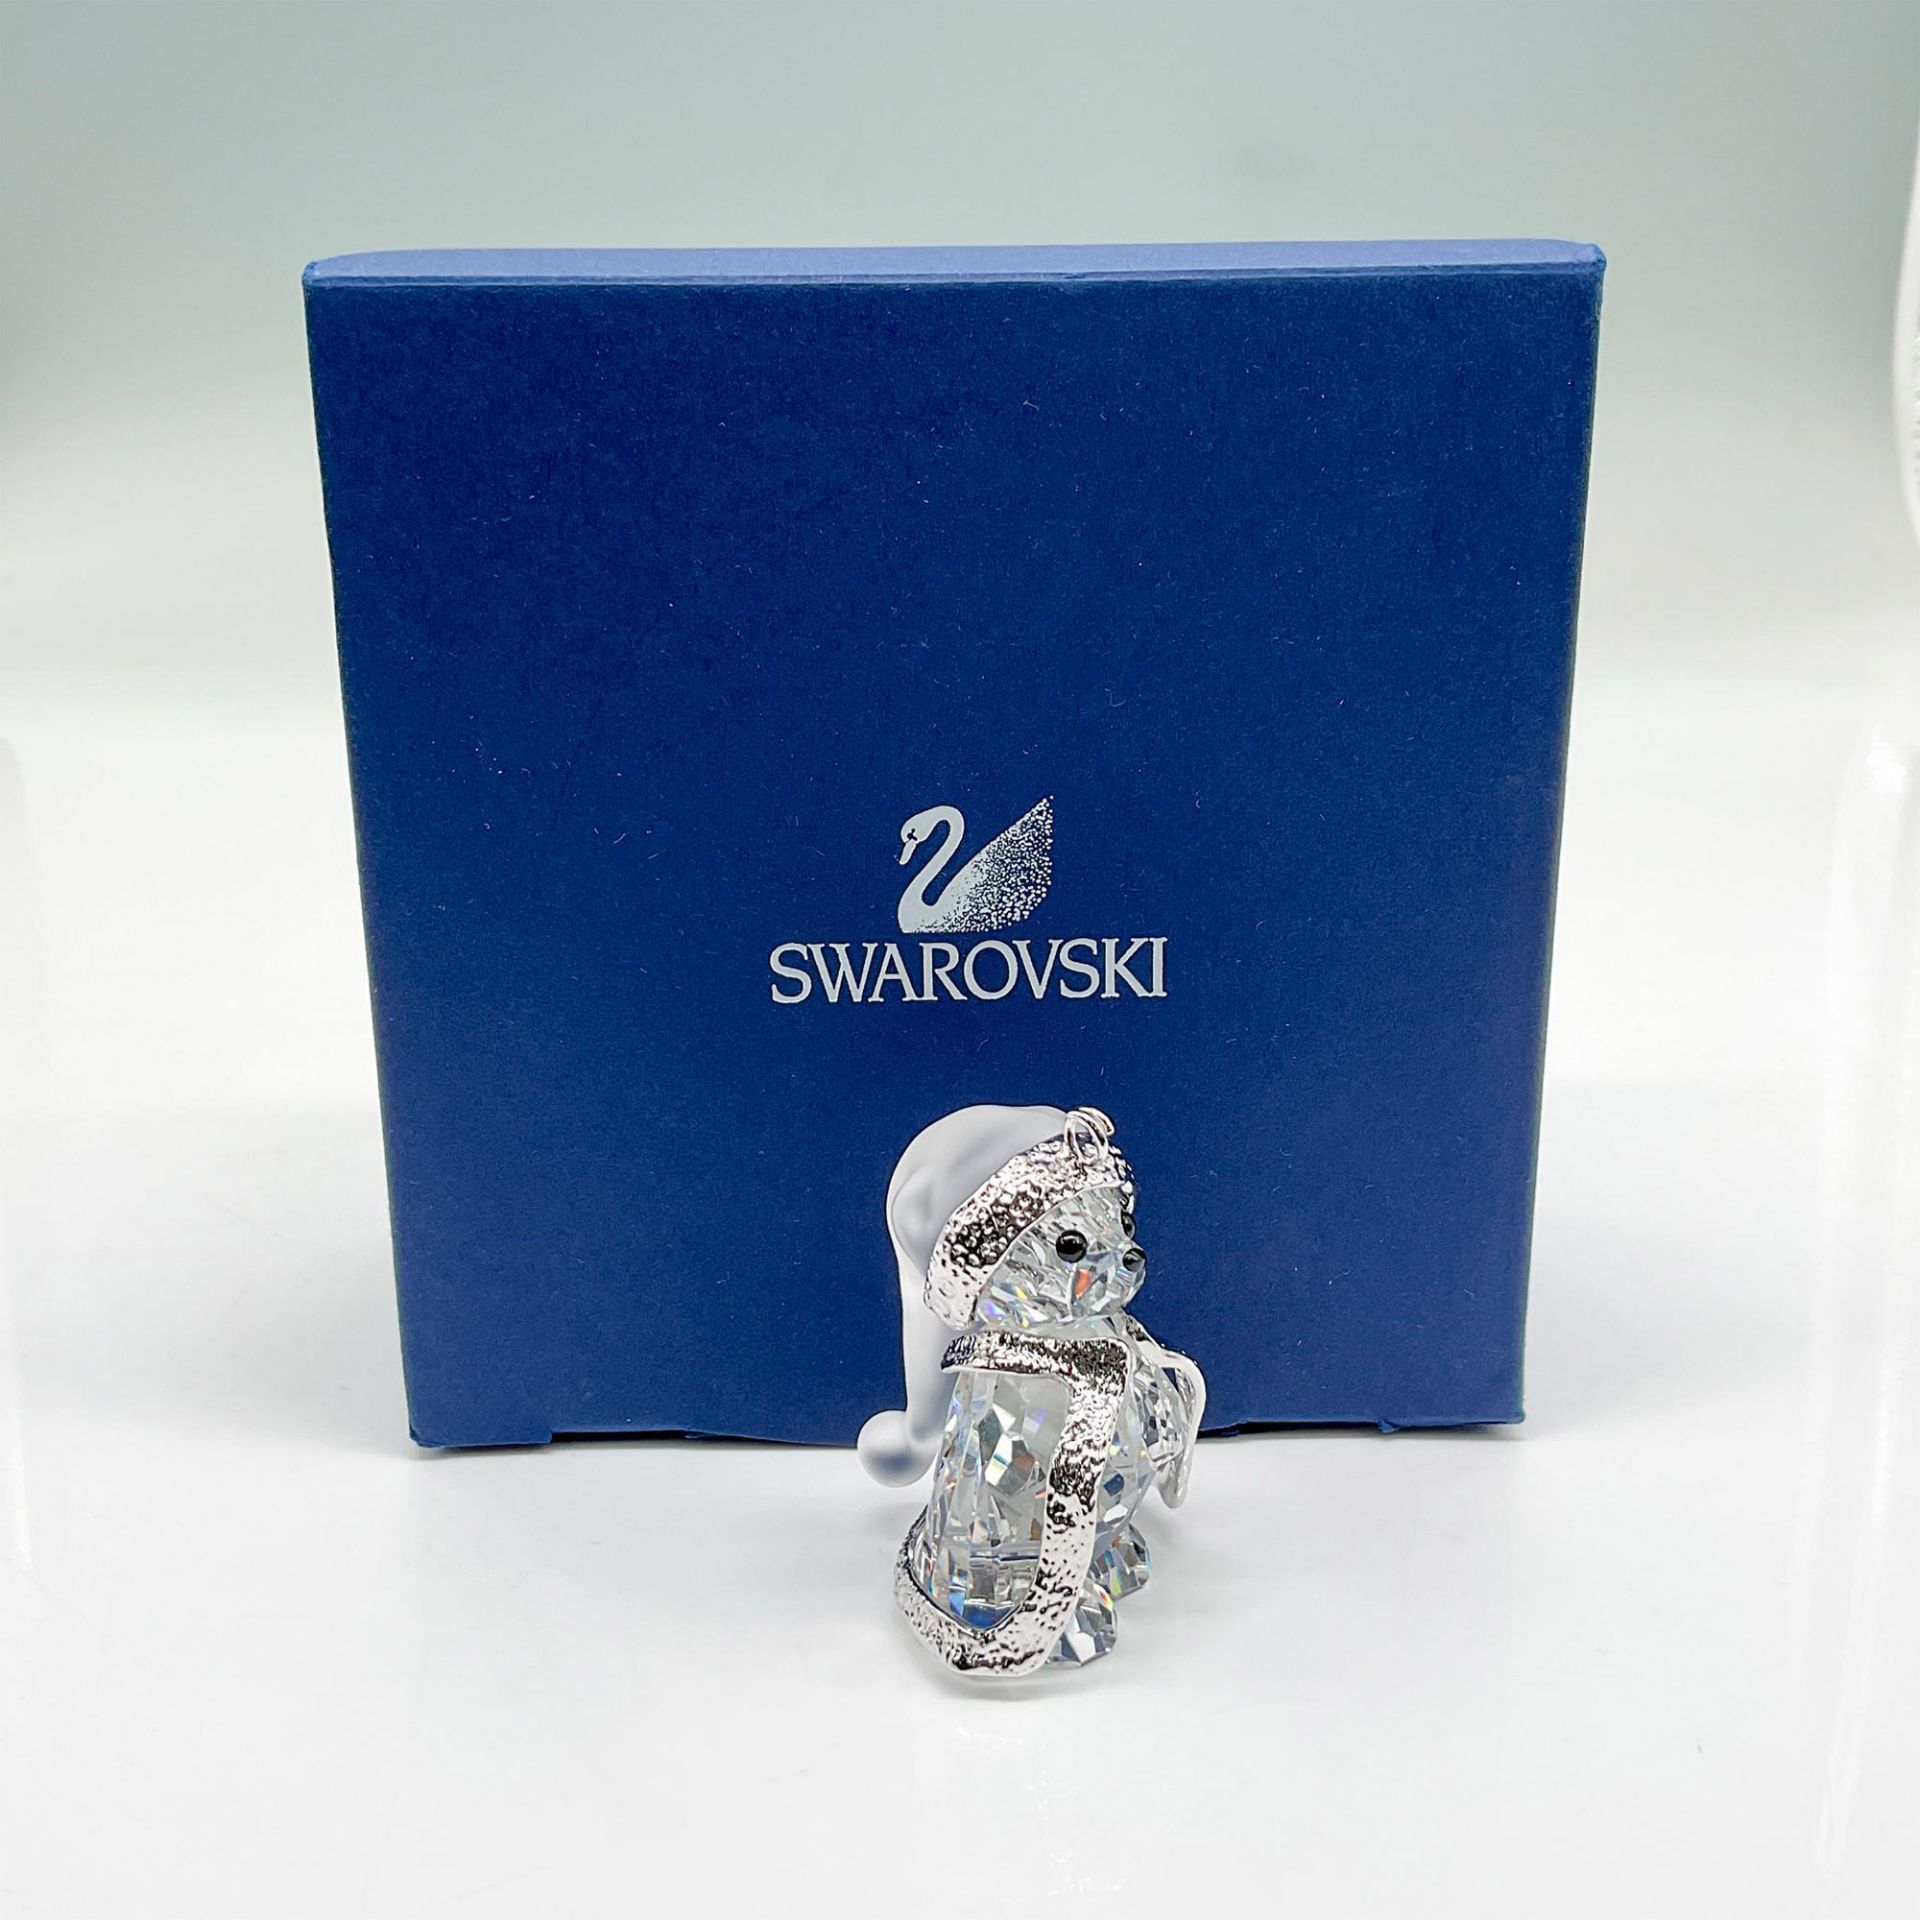 Swarovski Crystal Figurine, Kris Bear Santa - Image 5 of 5